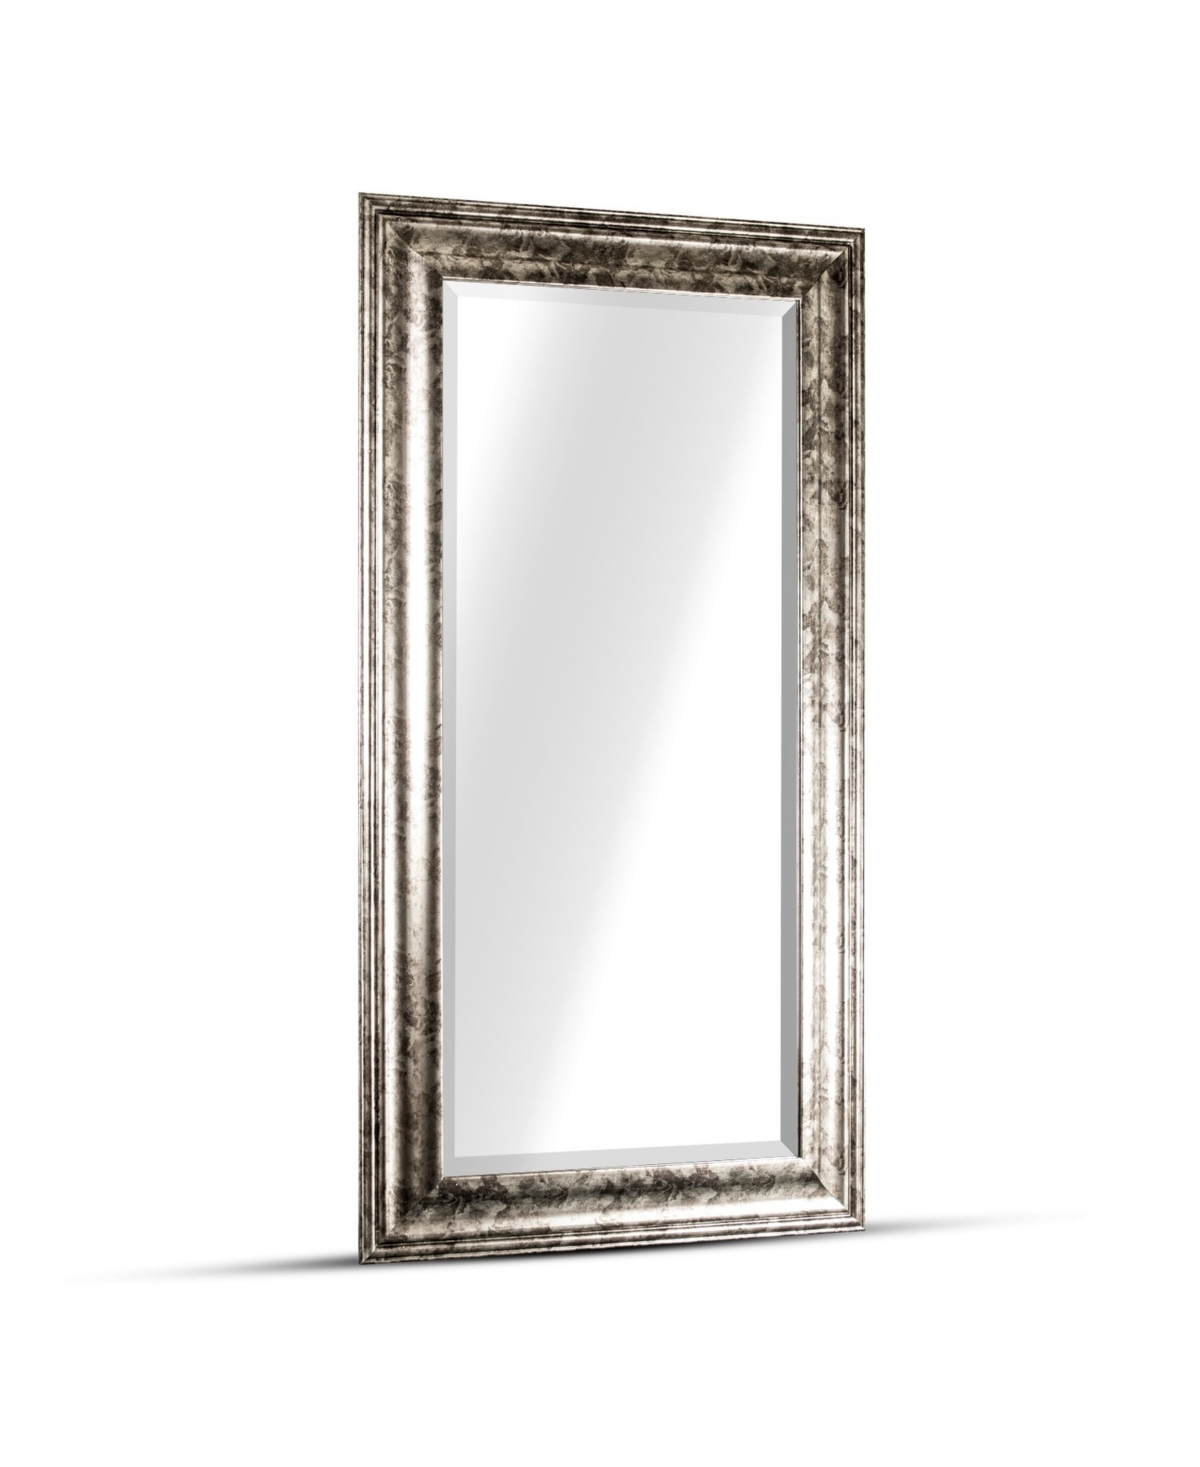 American Art Decor Lena Wall Vanity Mirror - Silver-Tone